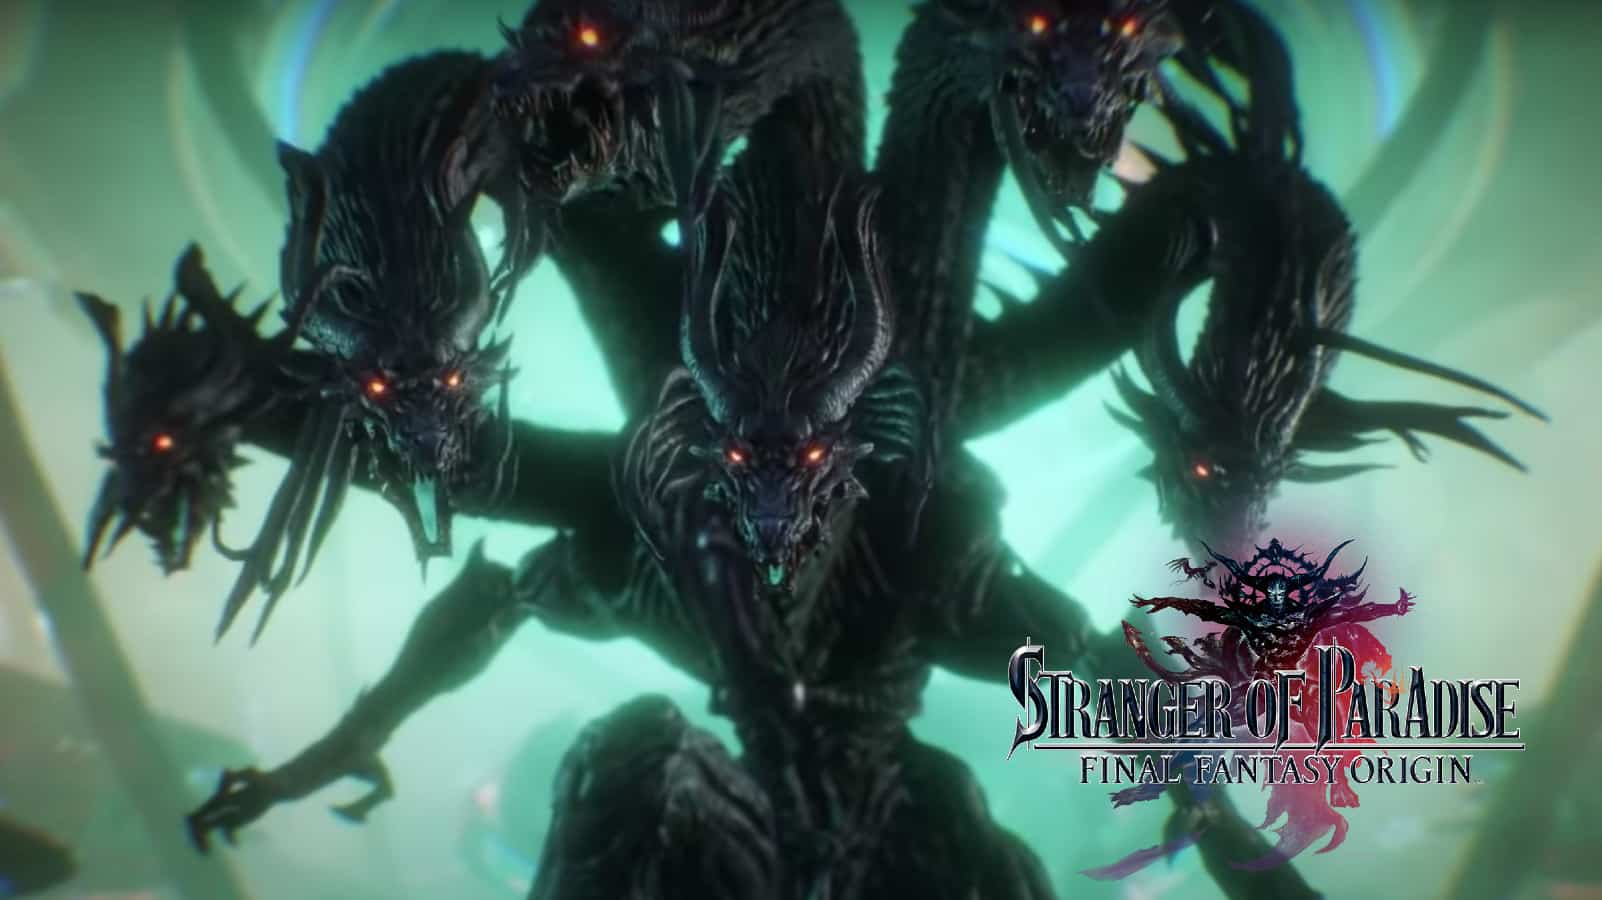 Final Fantasy tiamat 6 headed dragon roars into camera